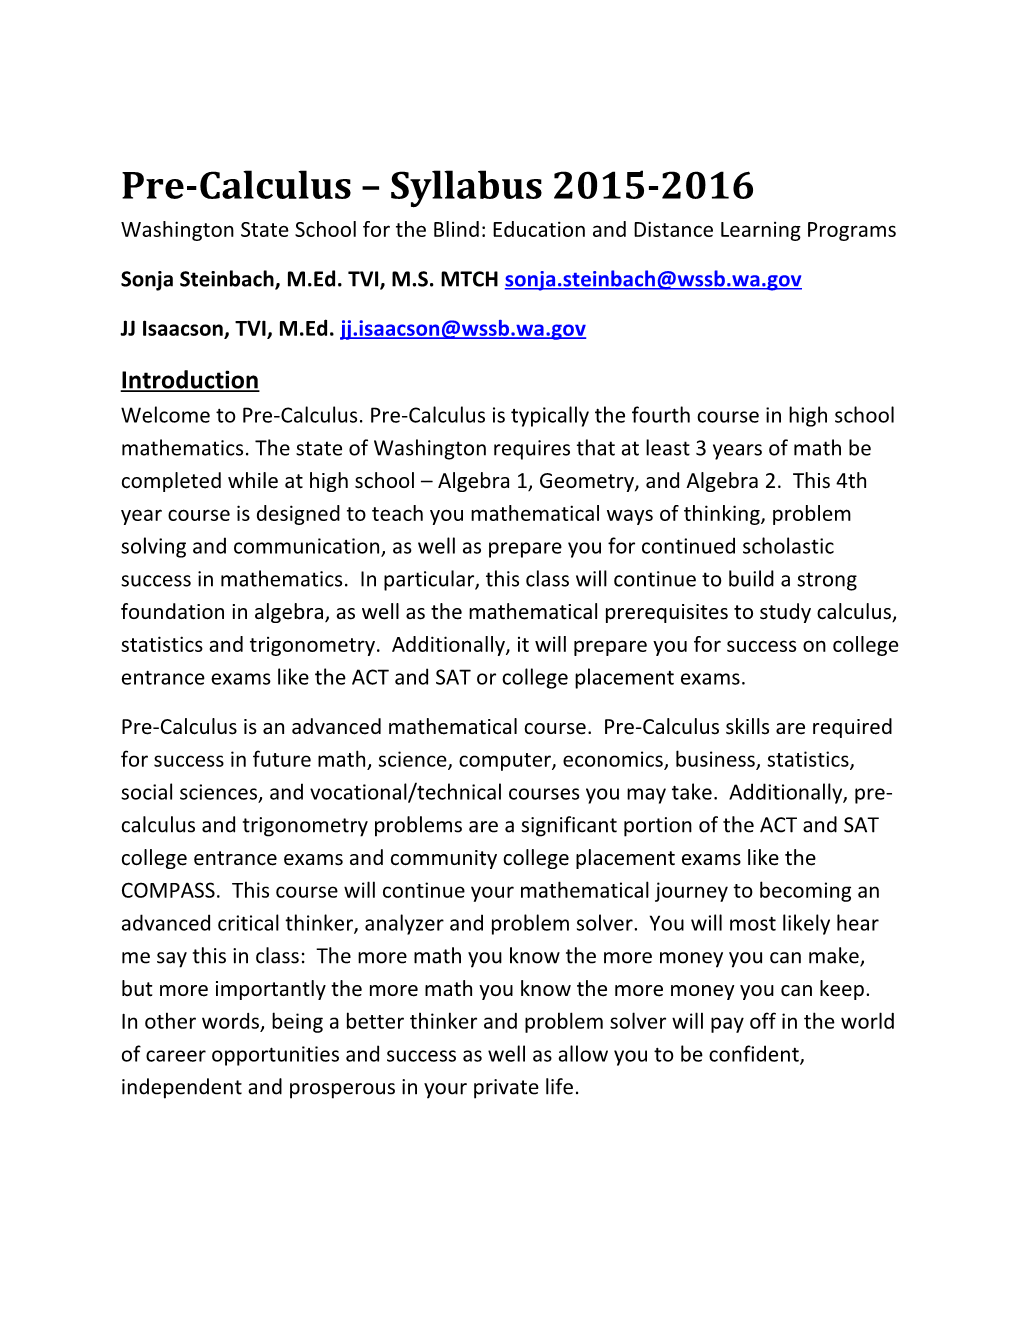 Pre-Calculus Syllabus 2015-2016